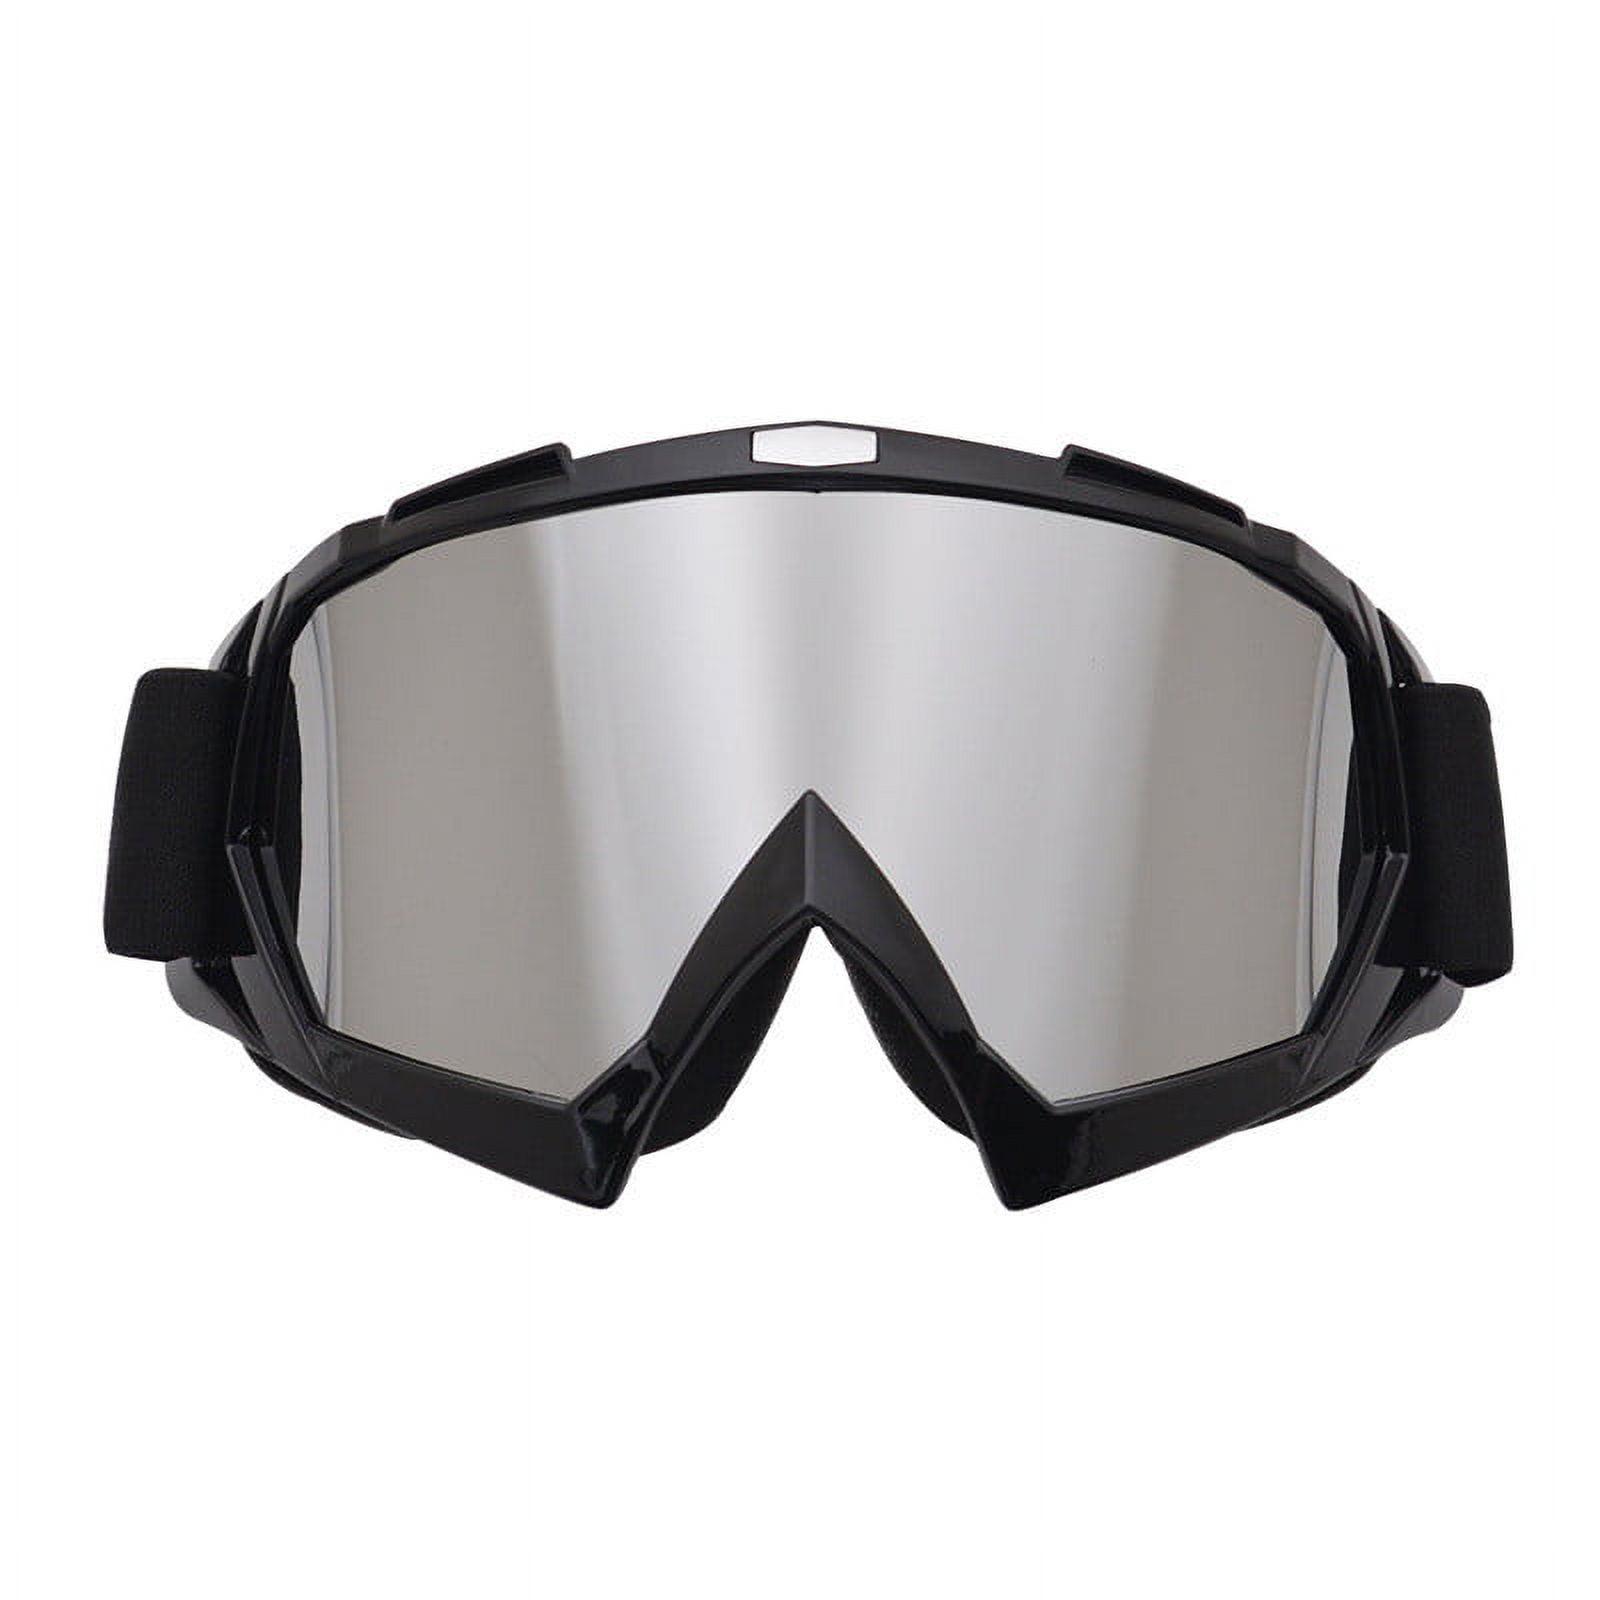 HSMQHJWE Vicbovo Outdoor Ski Goggles Ski Sunglasses Snowboard